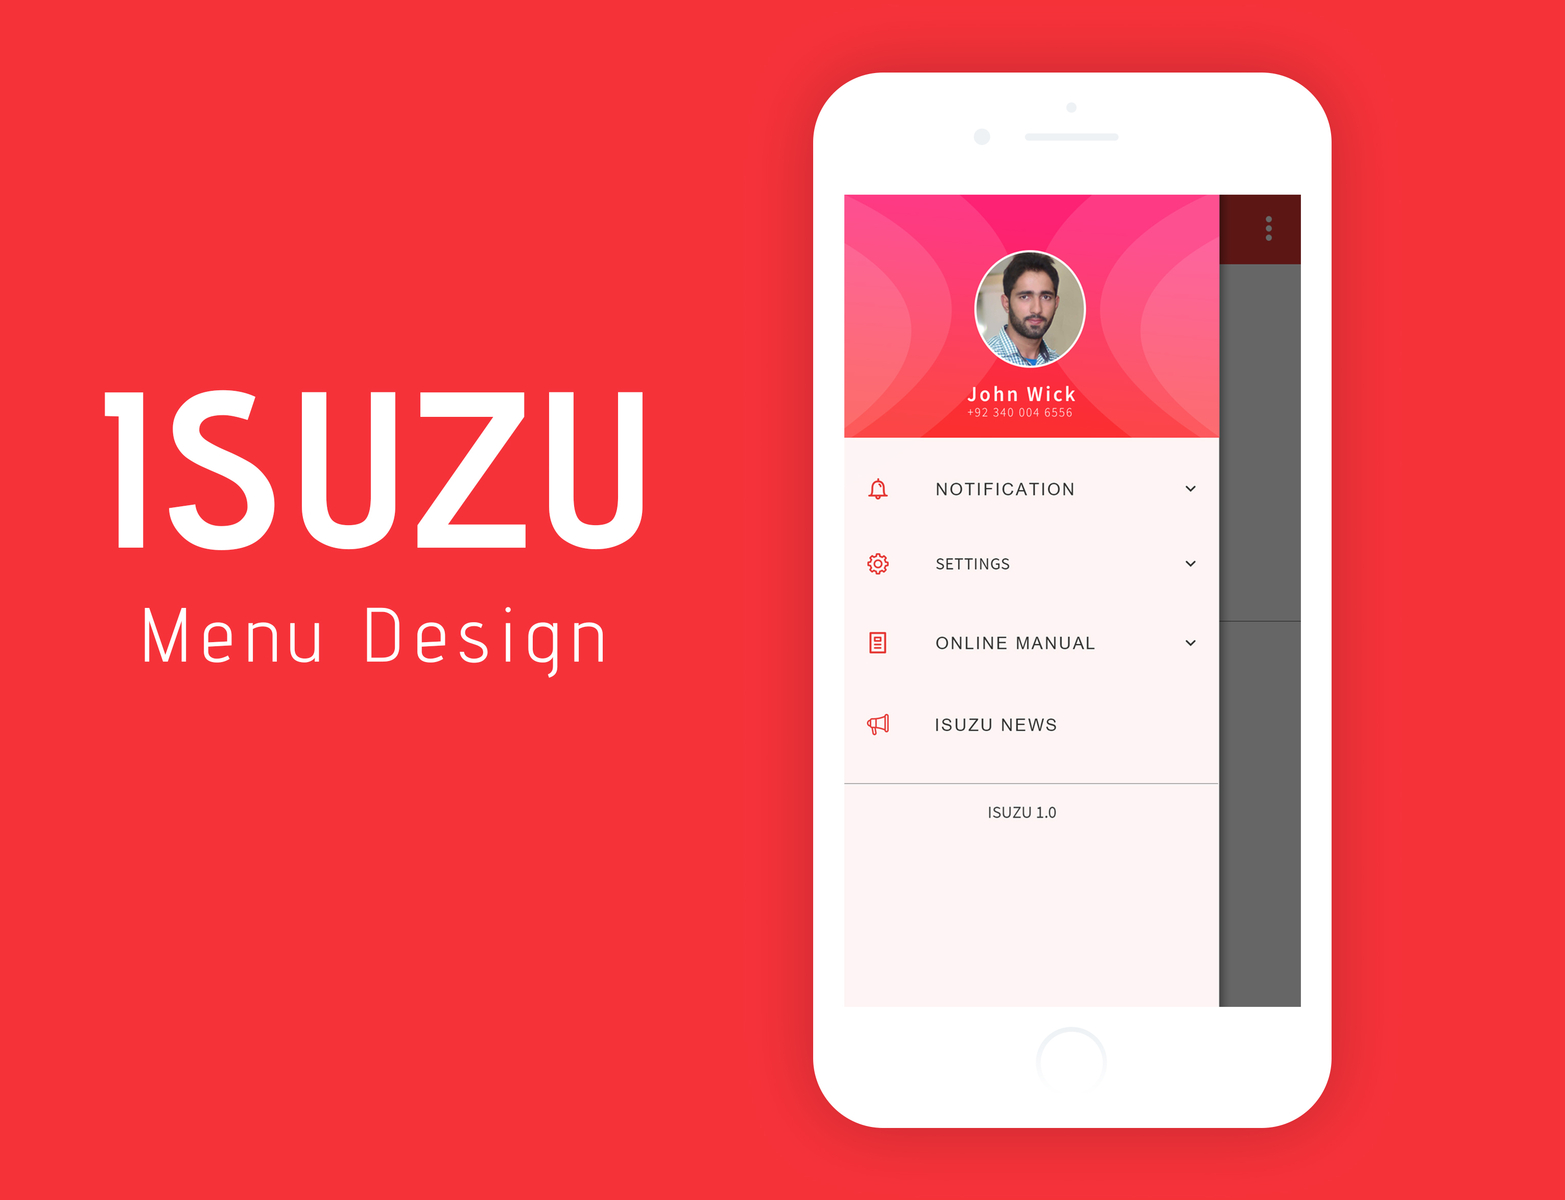 ISUZU - Menu Design by Arslan Akbar on Dribbble